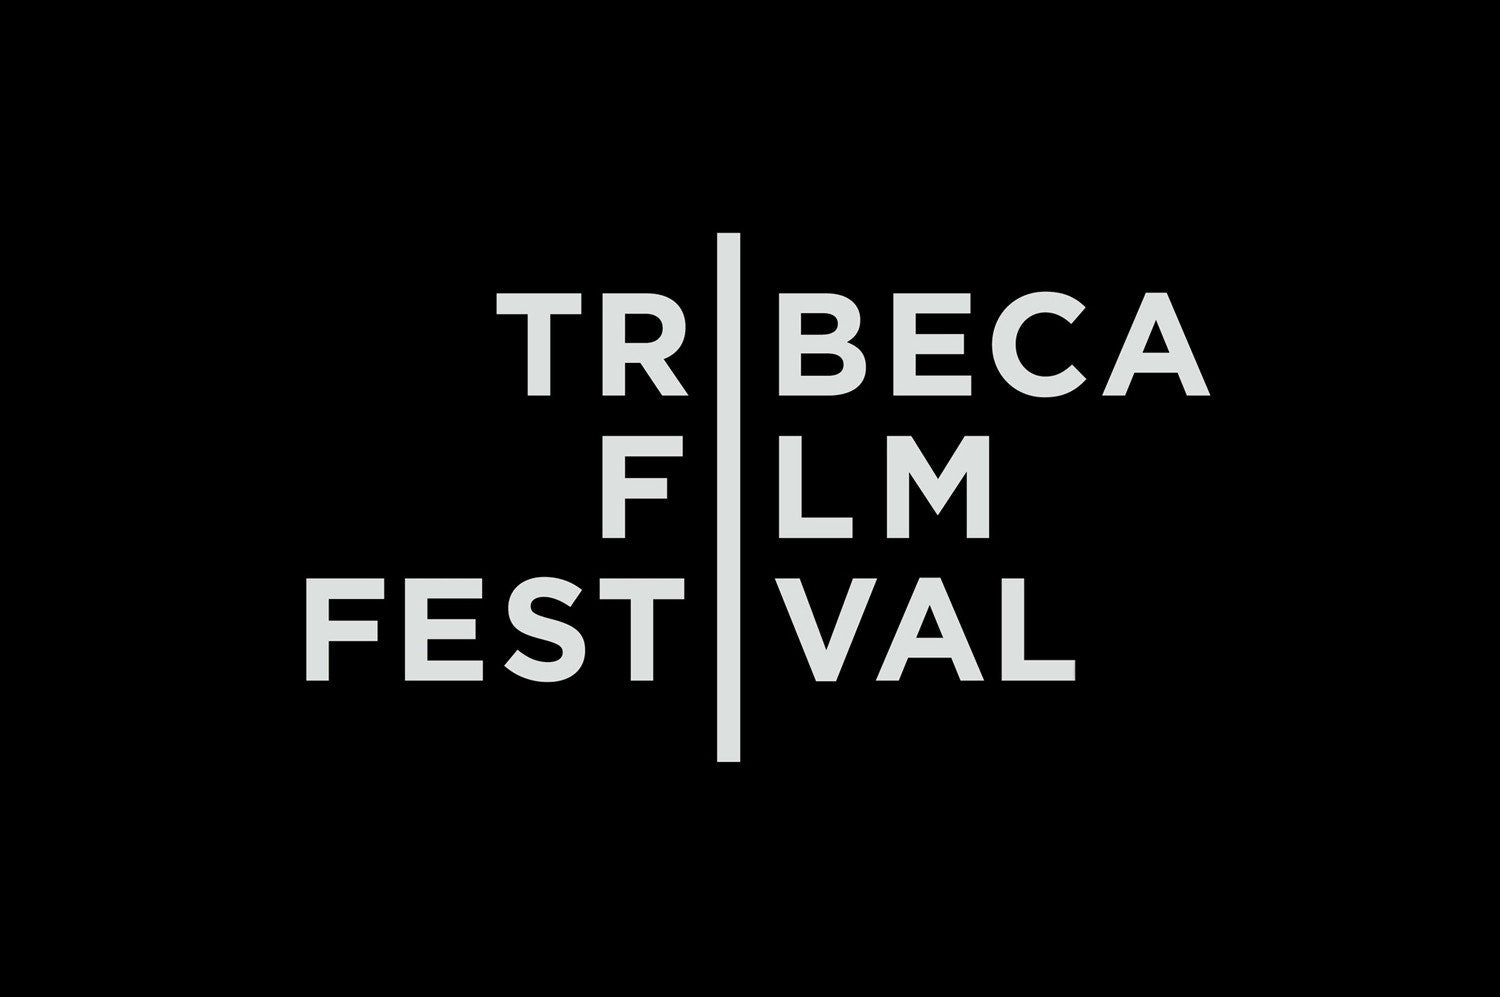 Tribeca Film Festival Branding | By Collins